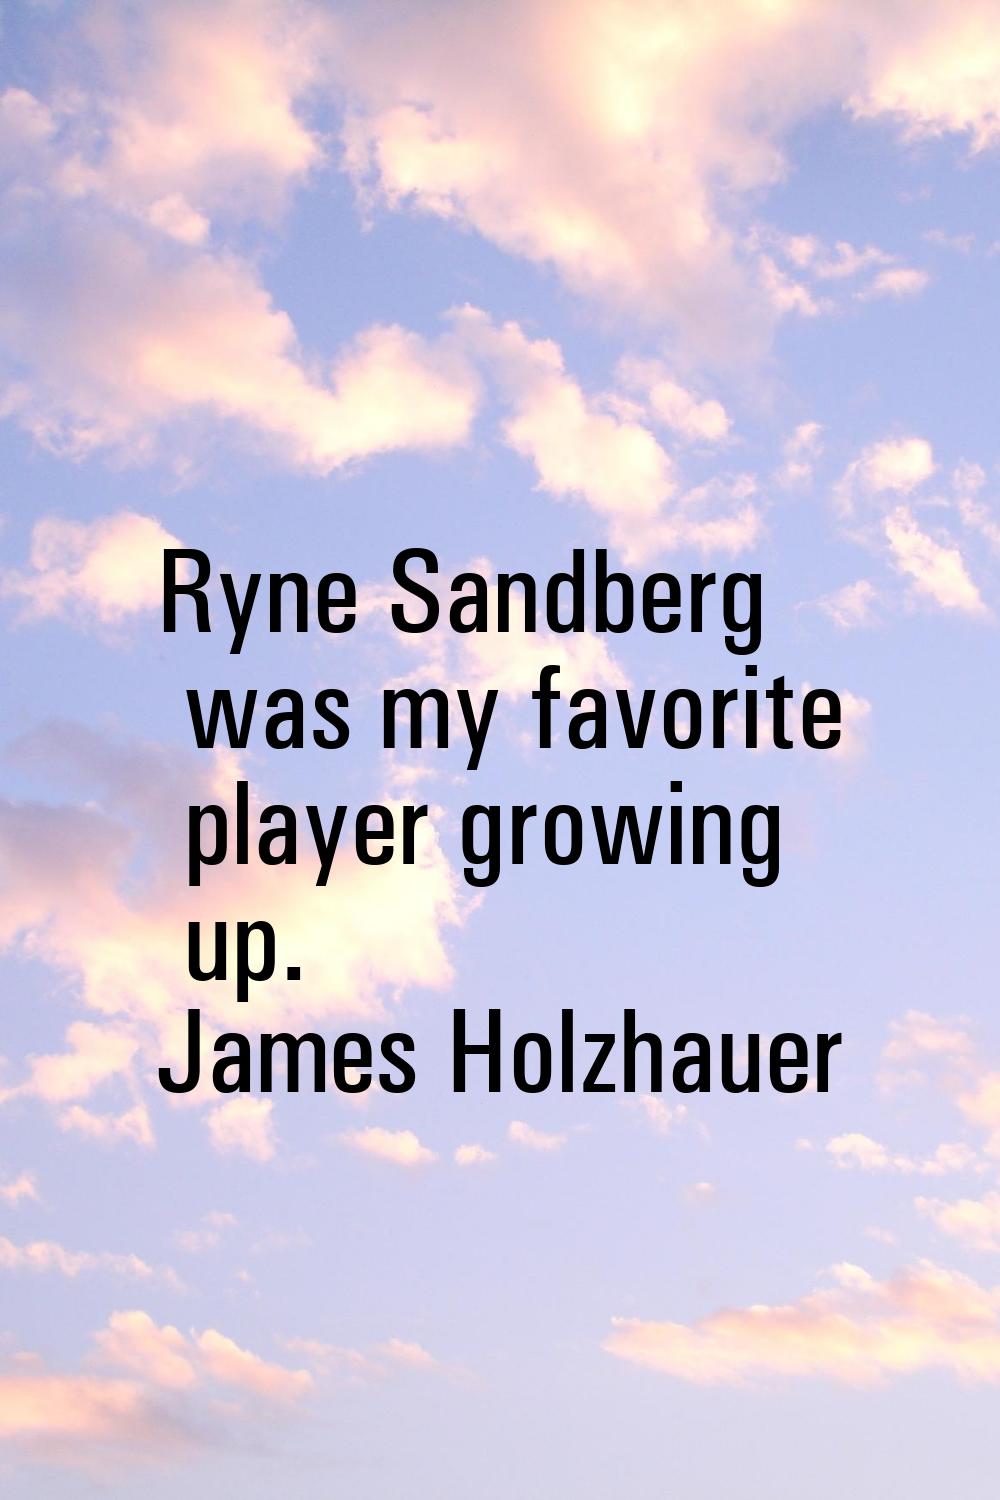 Ryne Sandberg was my favorite player growing up.